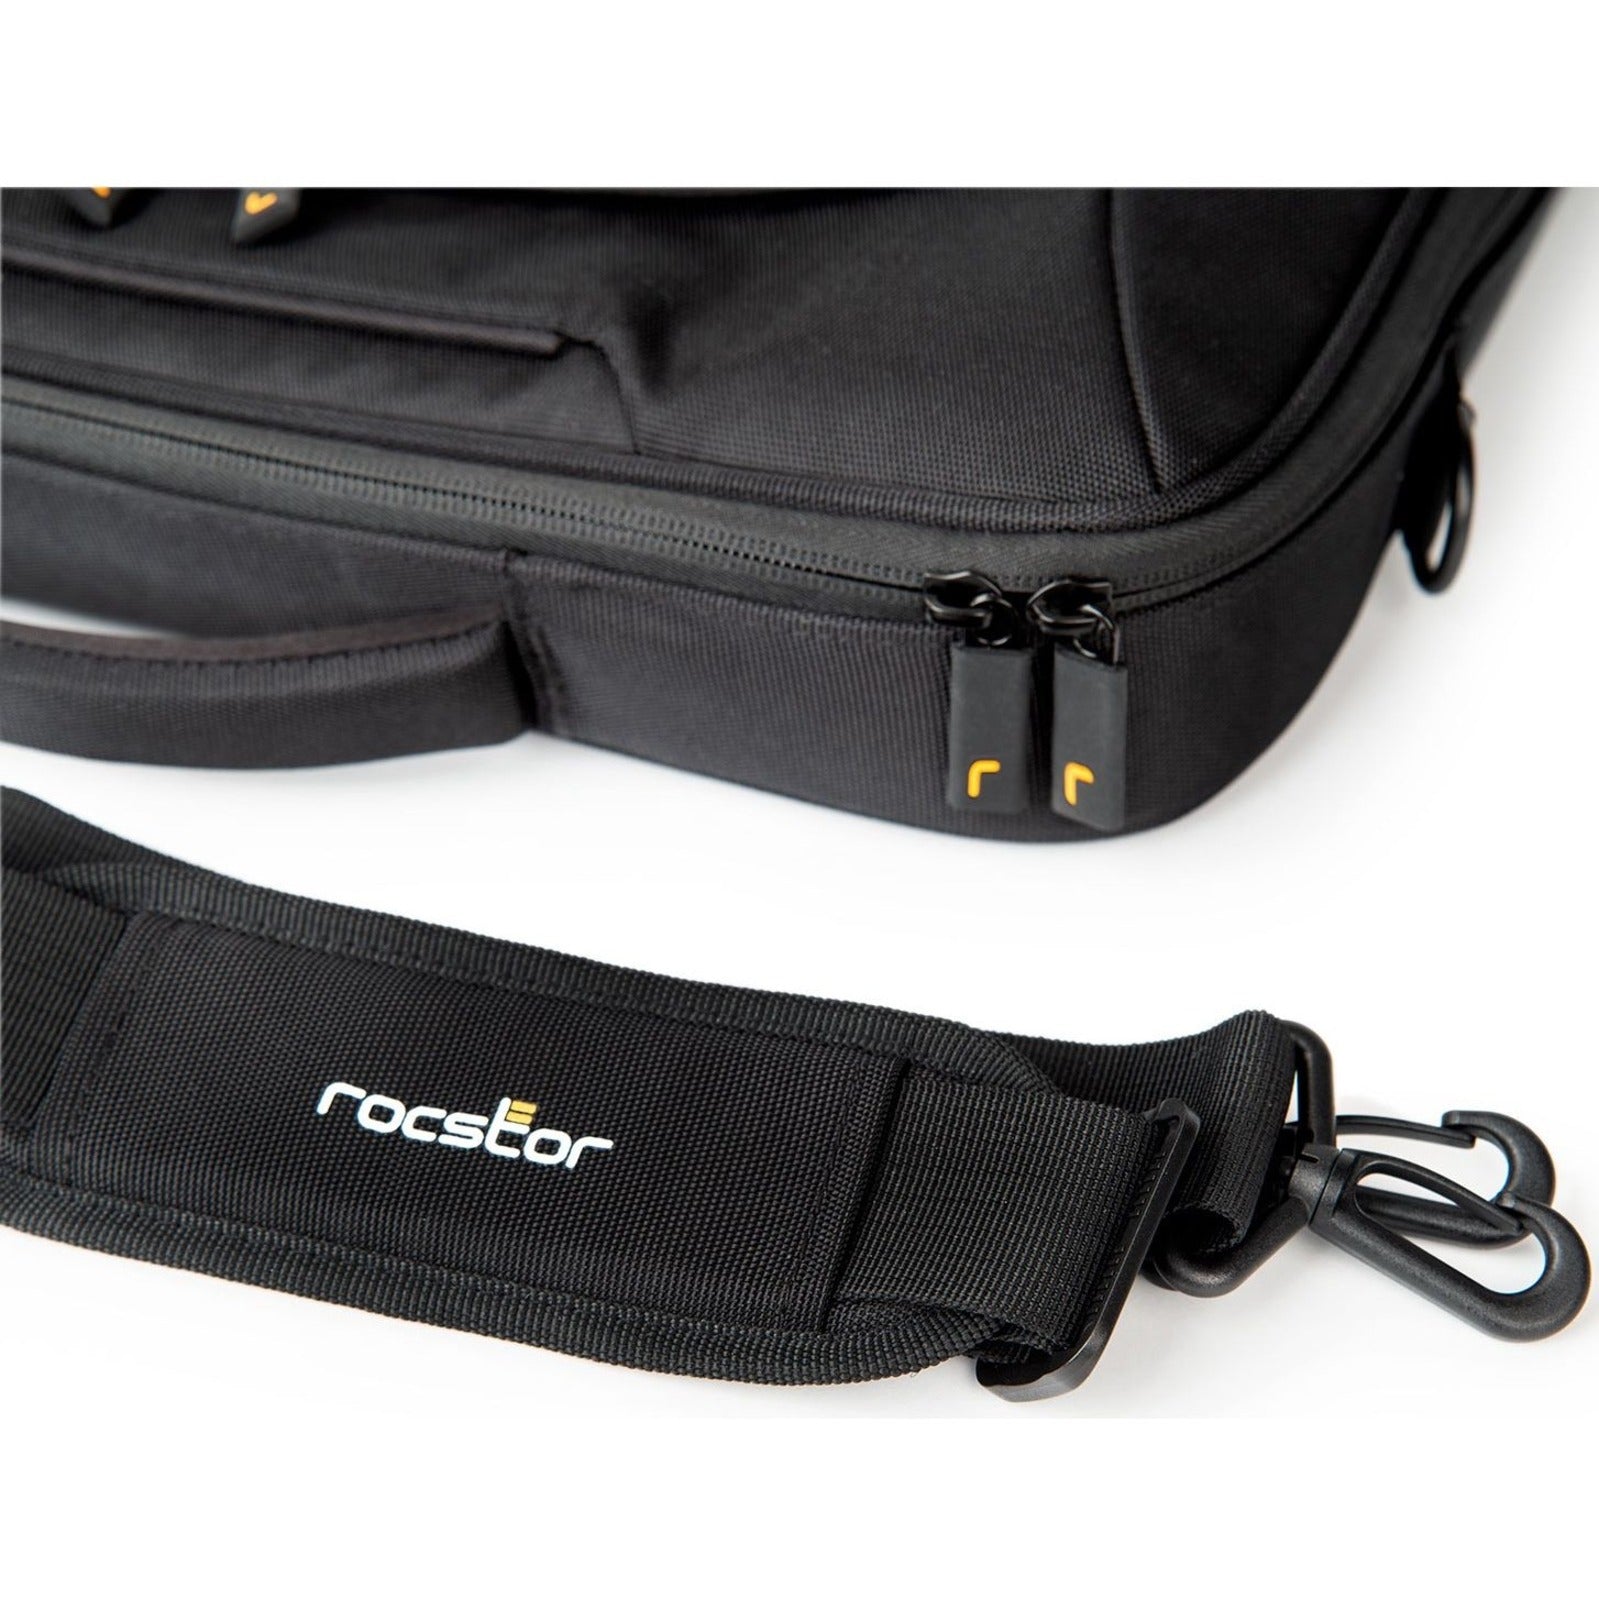 Rocstor Y1CC003-B1 Premium Universal Laptop Carrying Case Frontloading